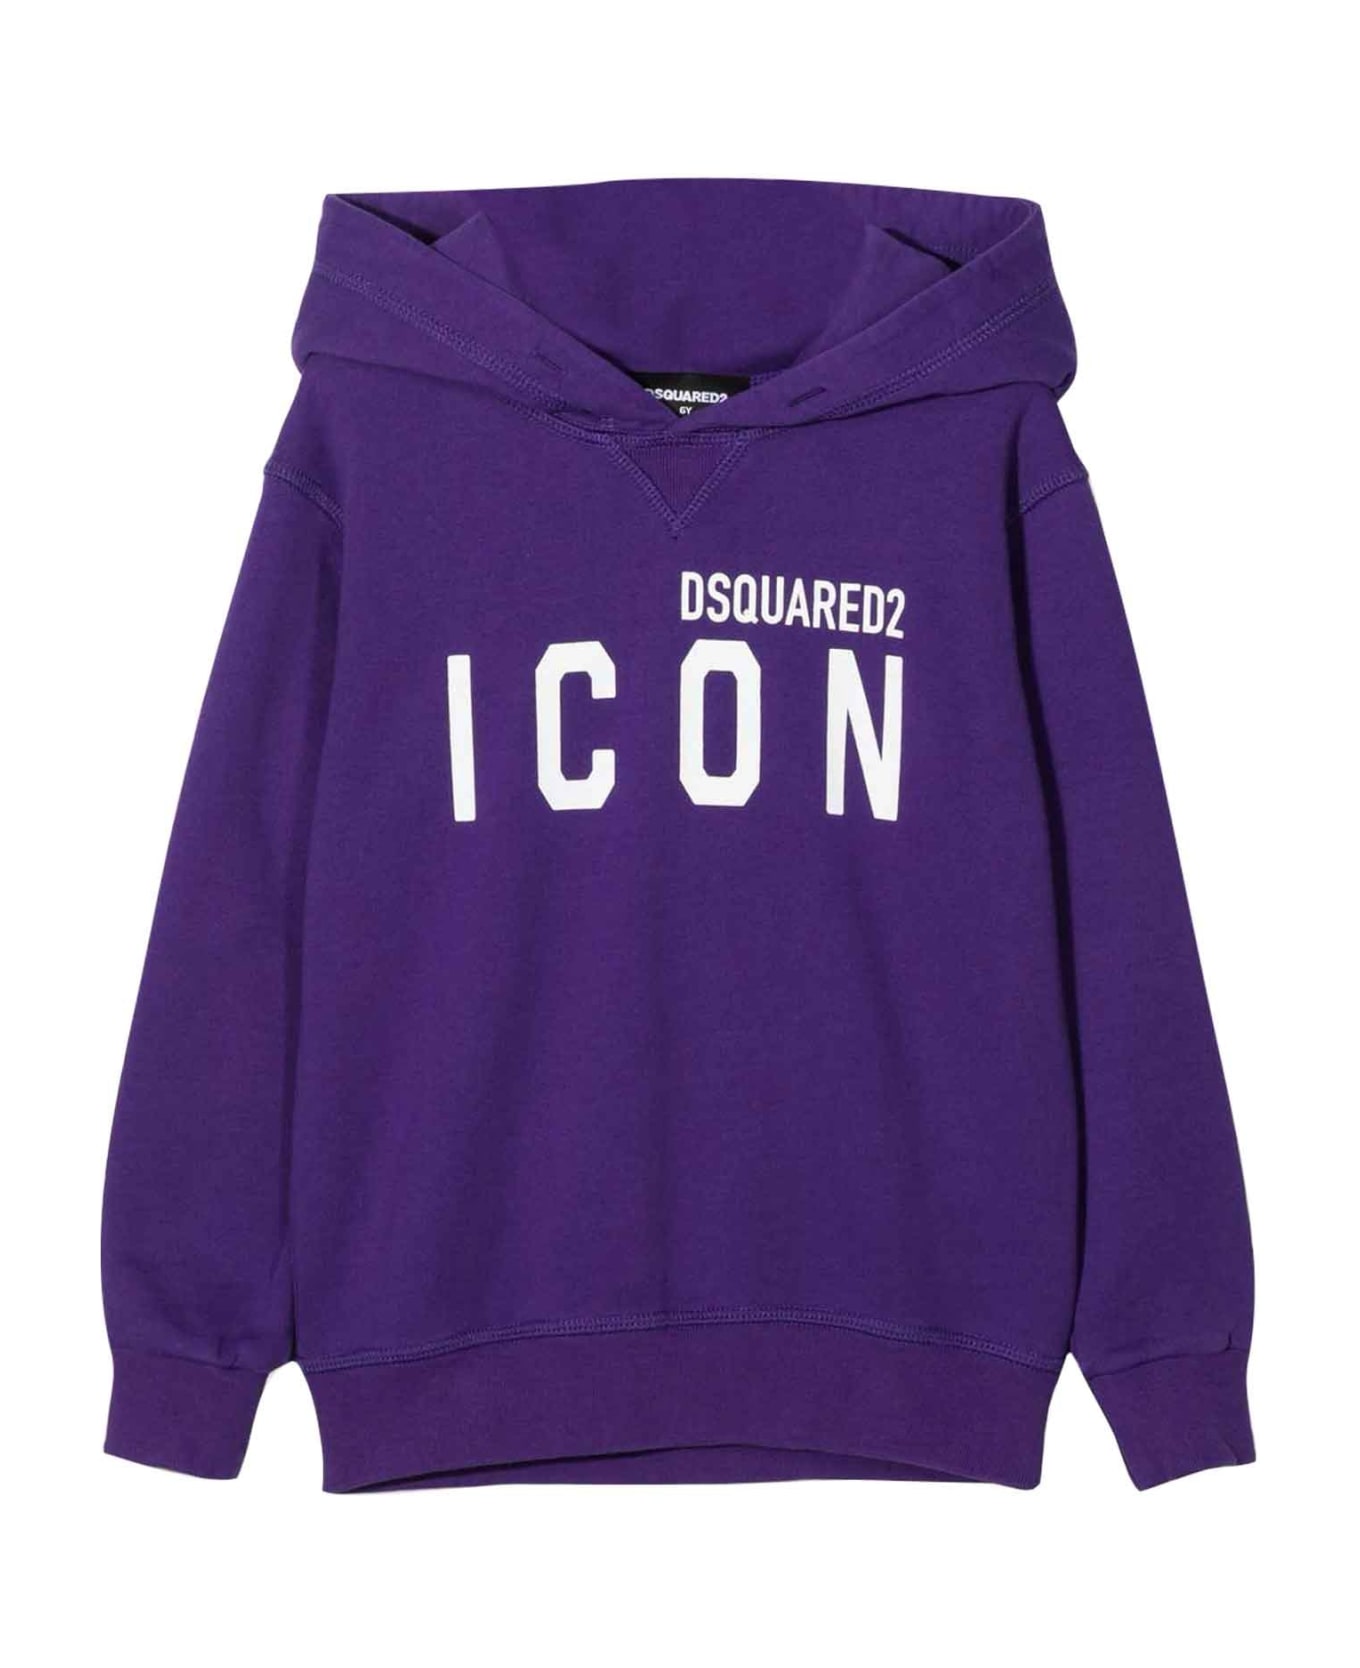 Dsquared2 Sweatshirt With Print - Violet